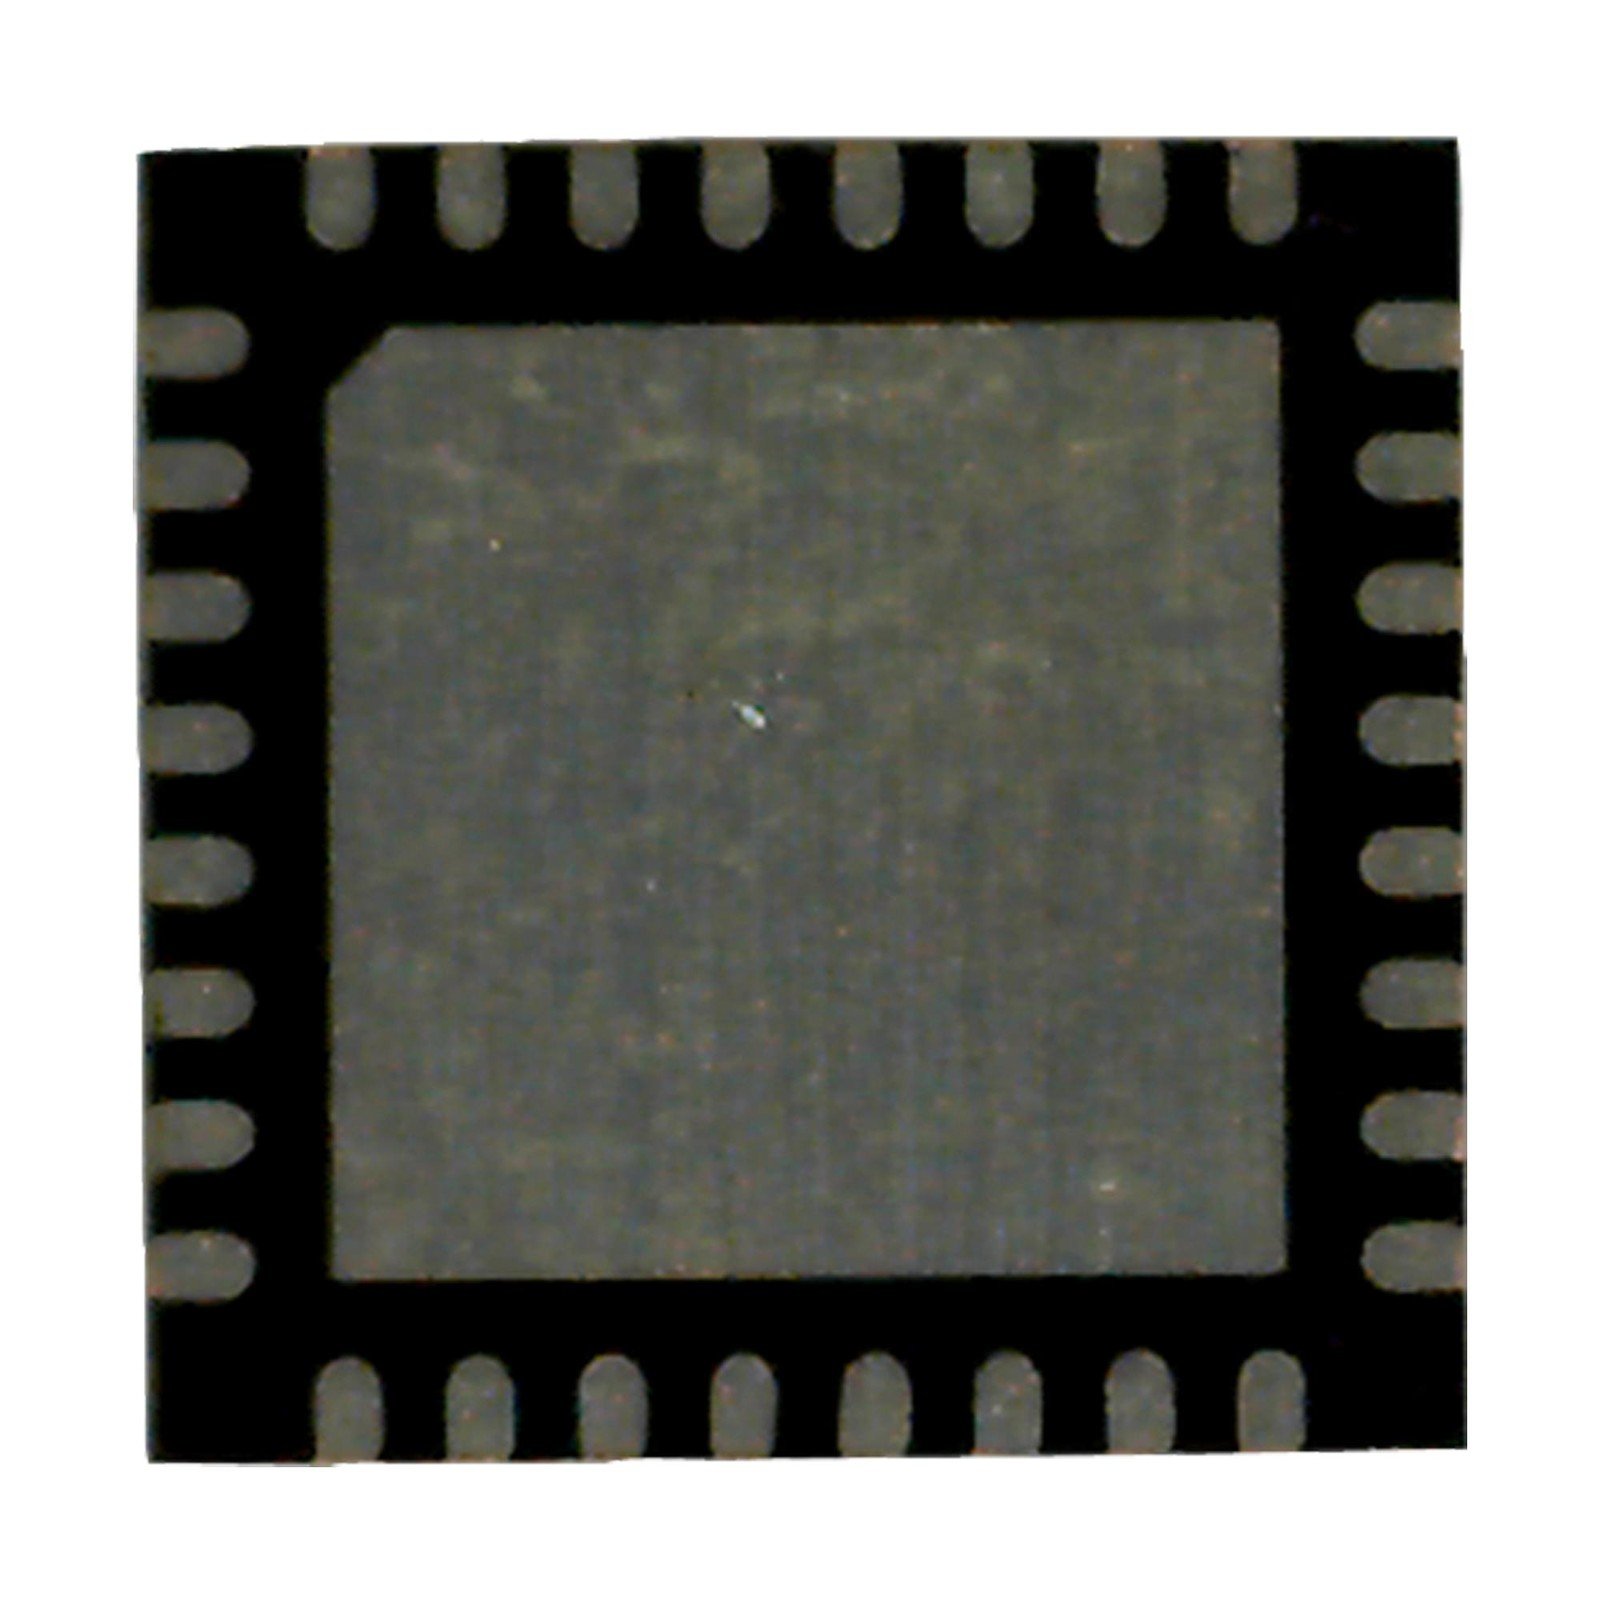 Microchip Atmega16U2-Mur Mcu, 8Bit, 16Mhz, Vqfn-32